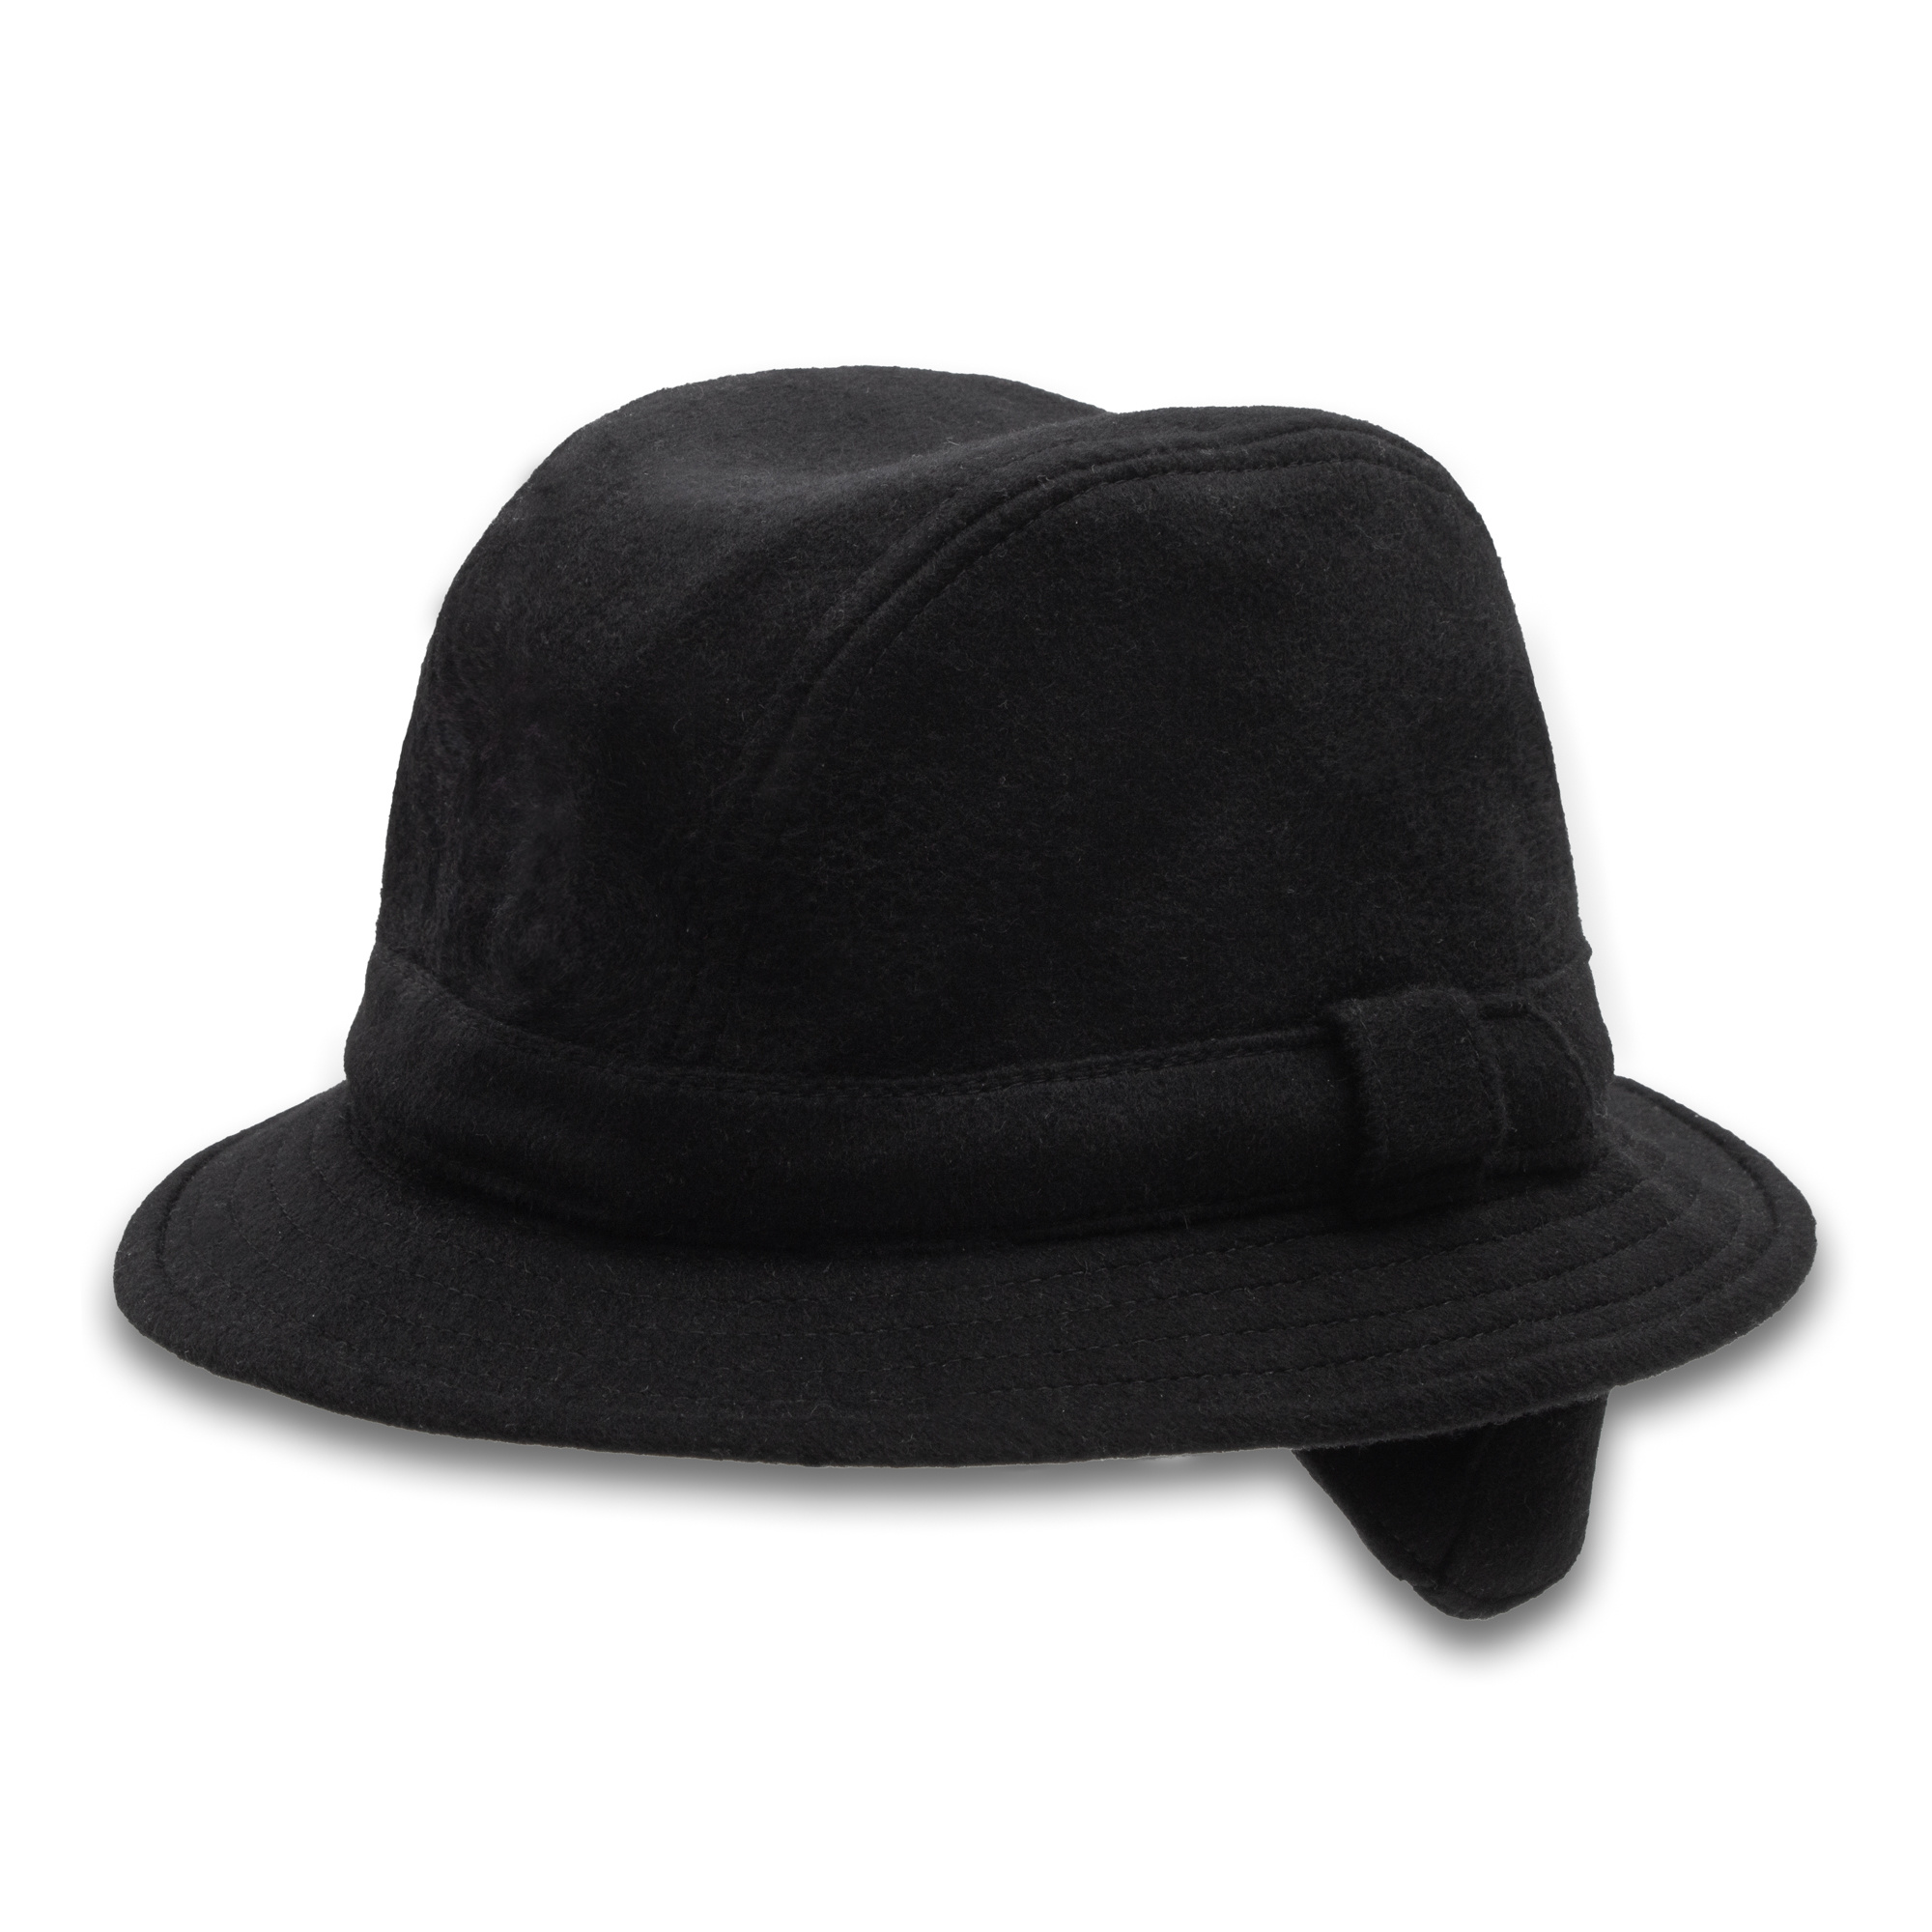 Double Sided Wide Brim Graffiti Bucket Hat For Men And Women XXXL